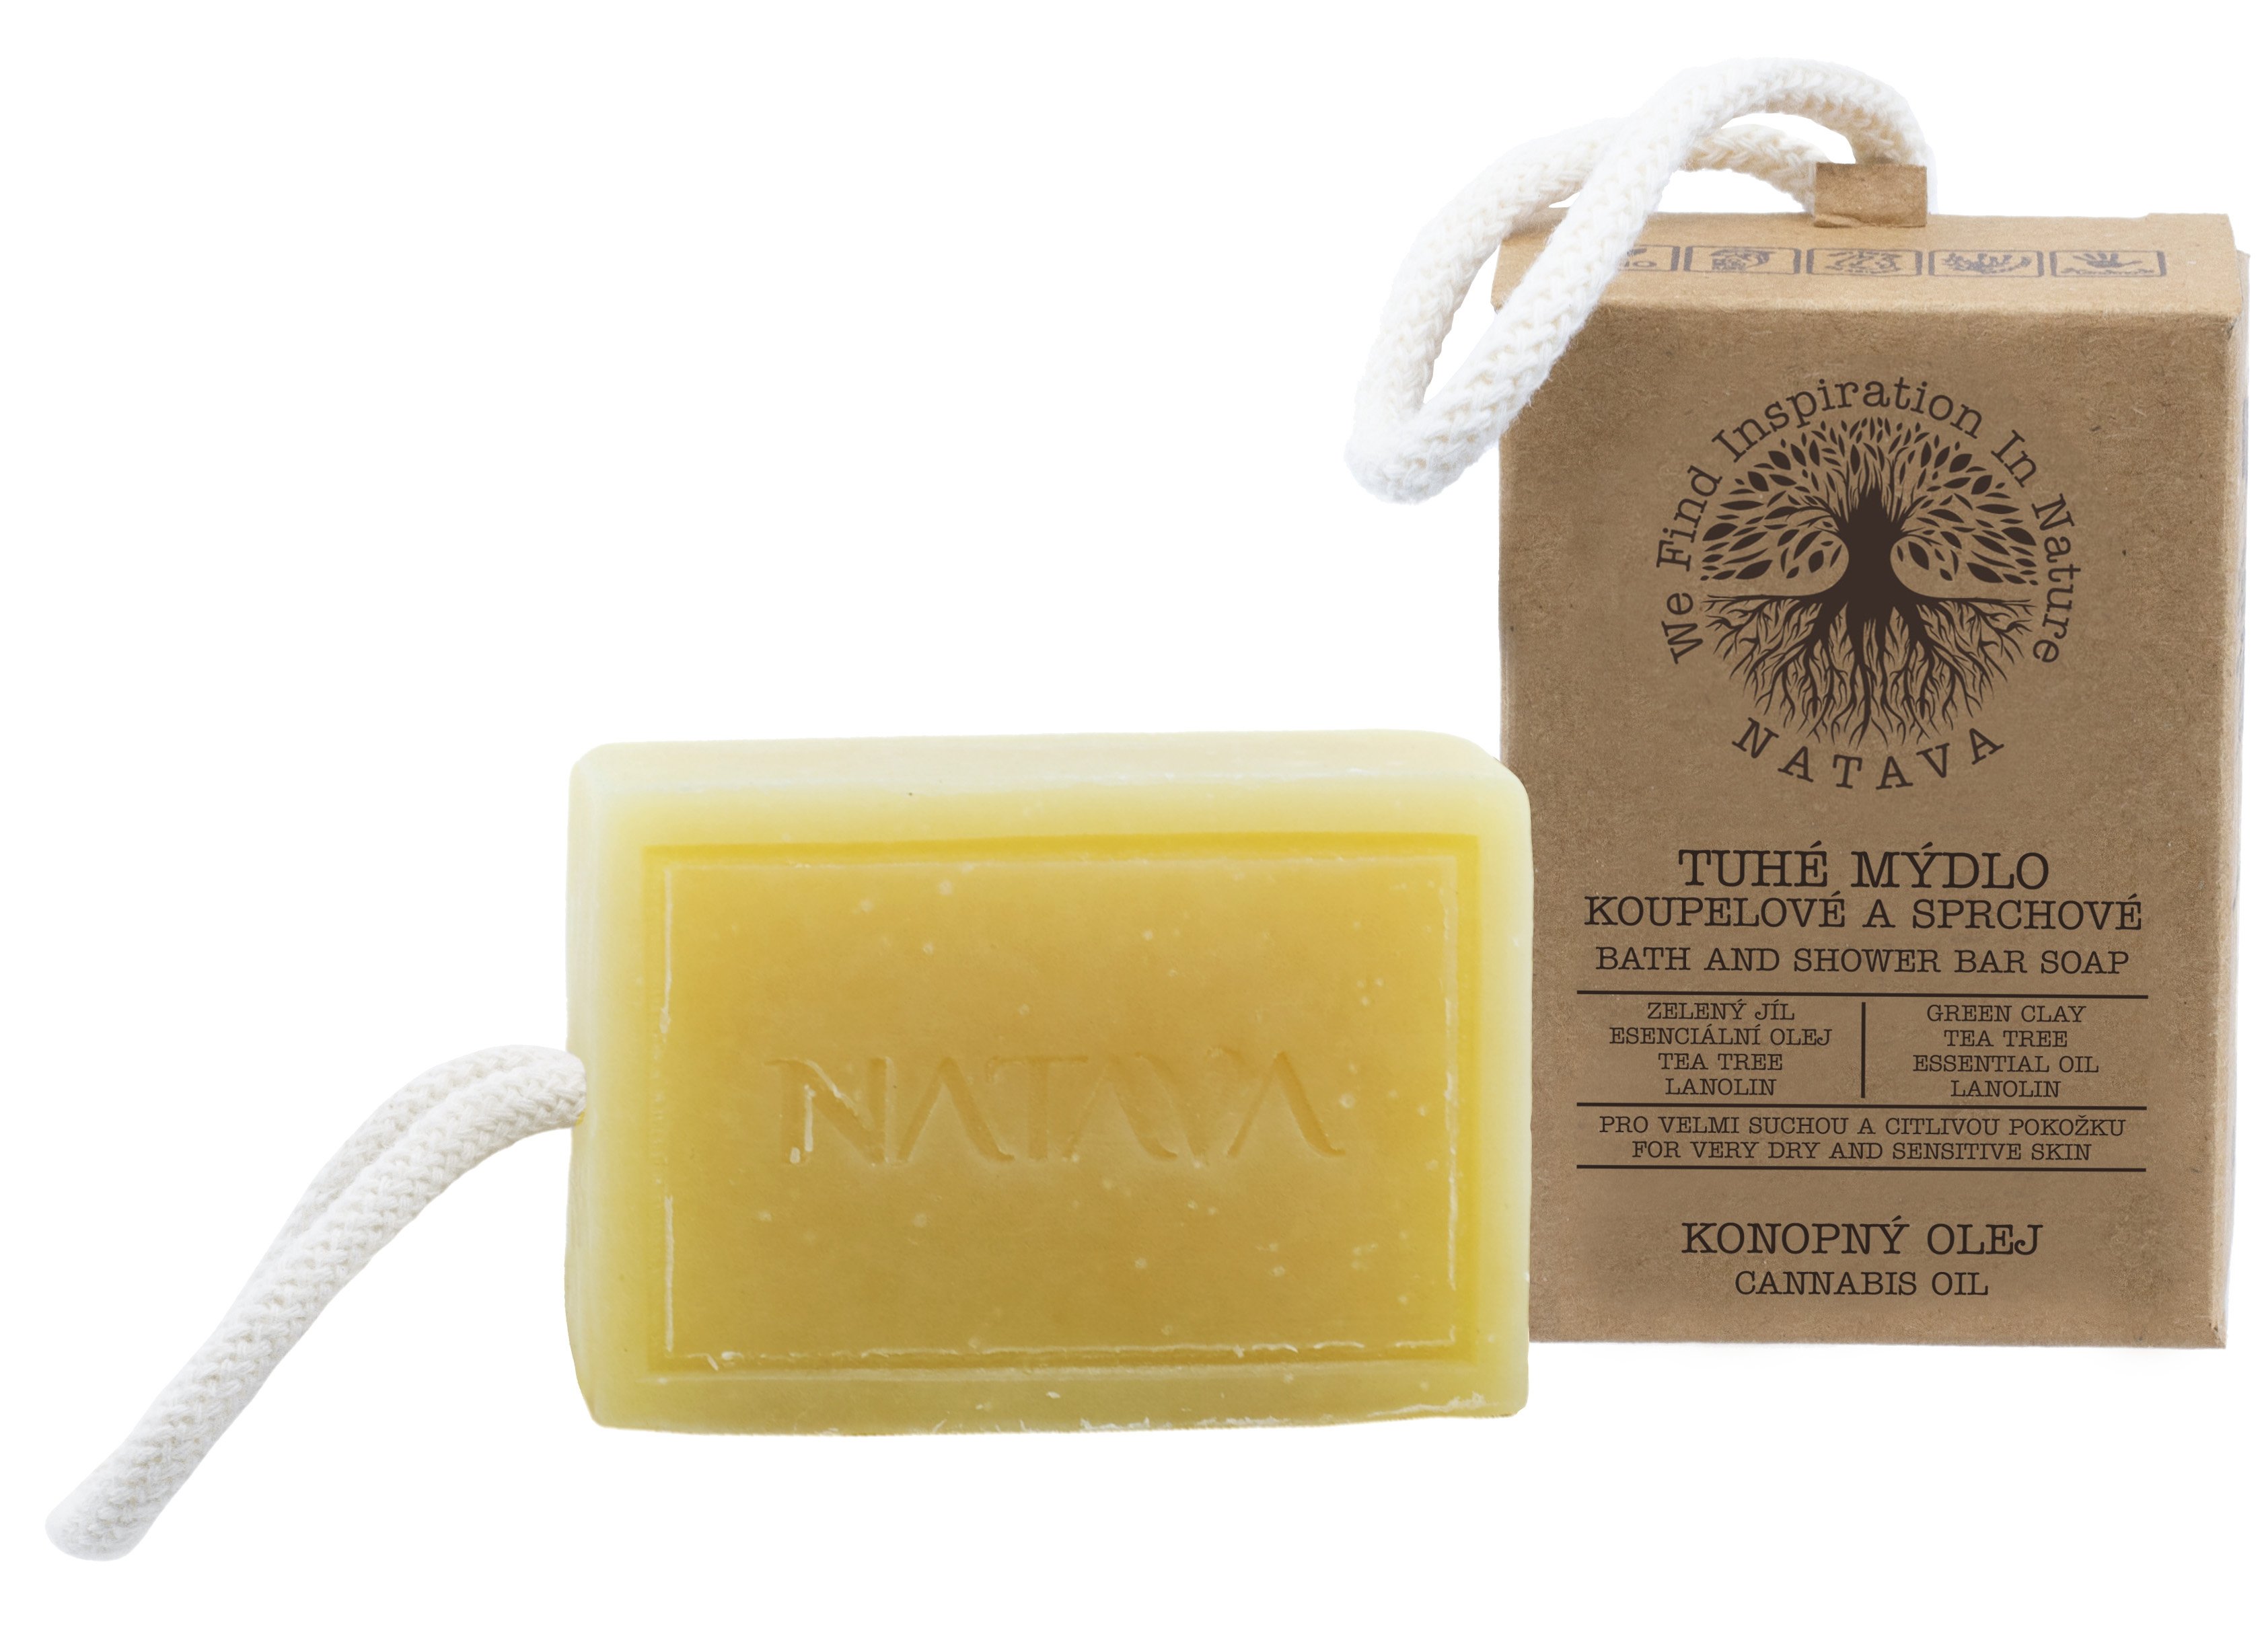 Мыло для ванны Natava Cannabis oil твёрдое, с маслом каннабиса, 100 г